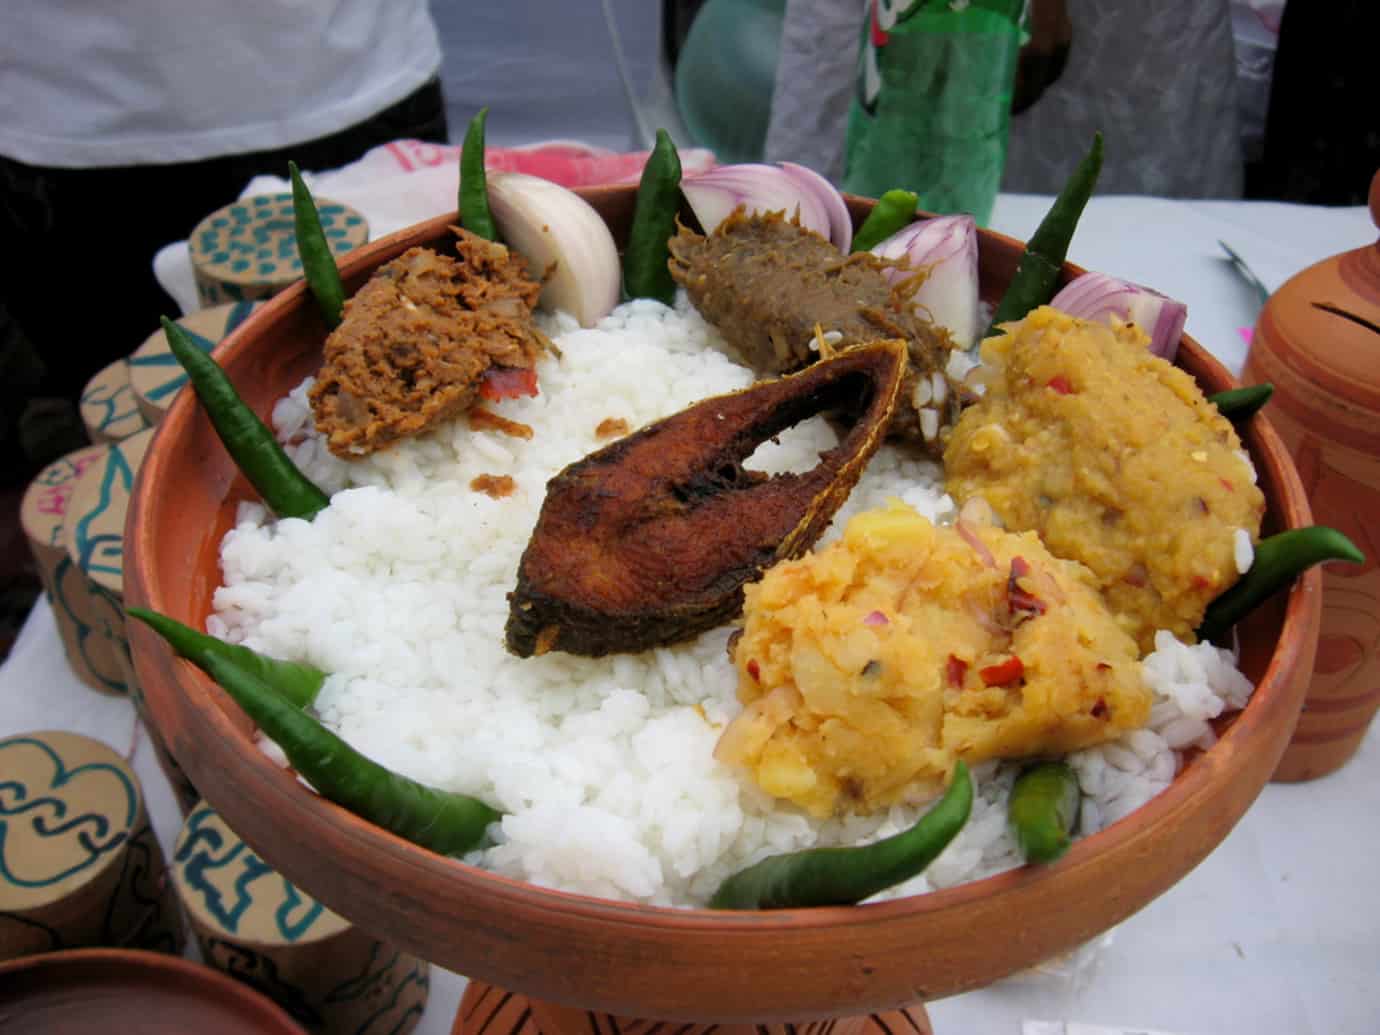 dhaka's cuisine